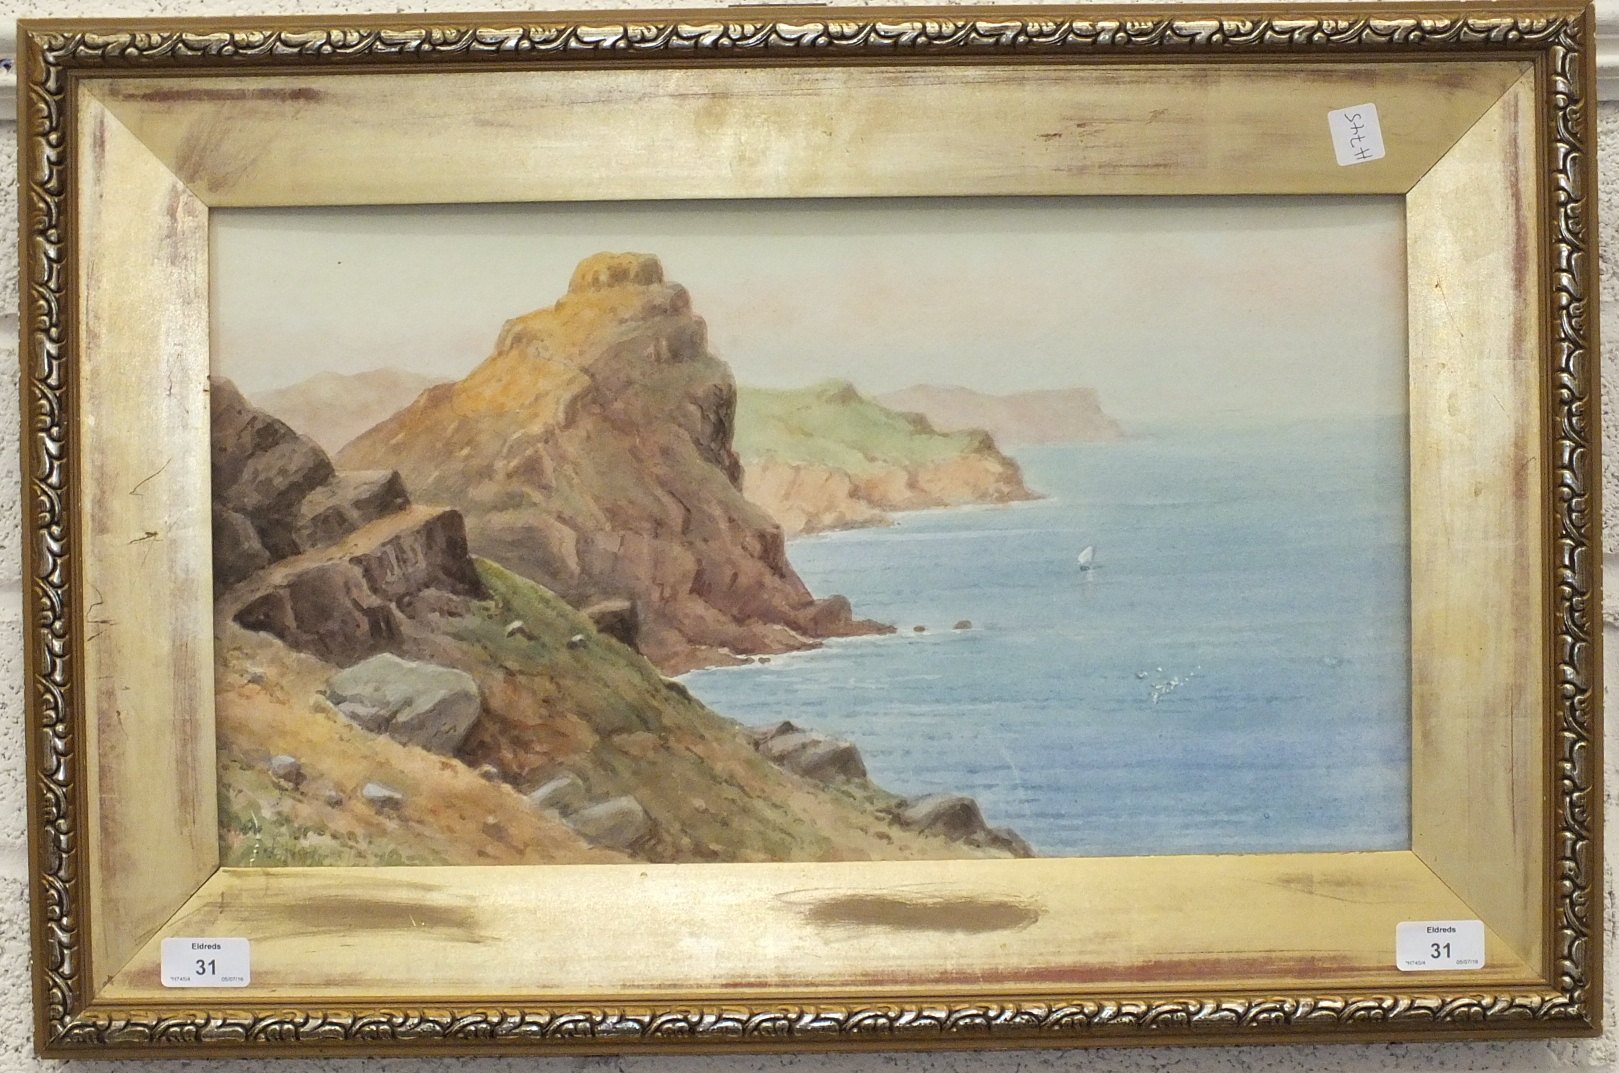 Lewis Mortimer, 'Castle Rock on the North Devon Coast', a signed watercolour, 28 x 51cm.